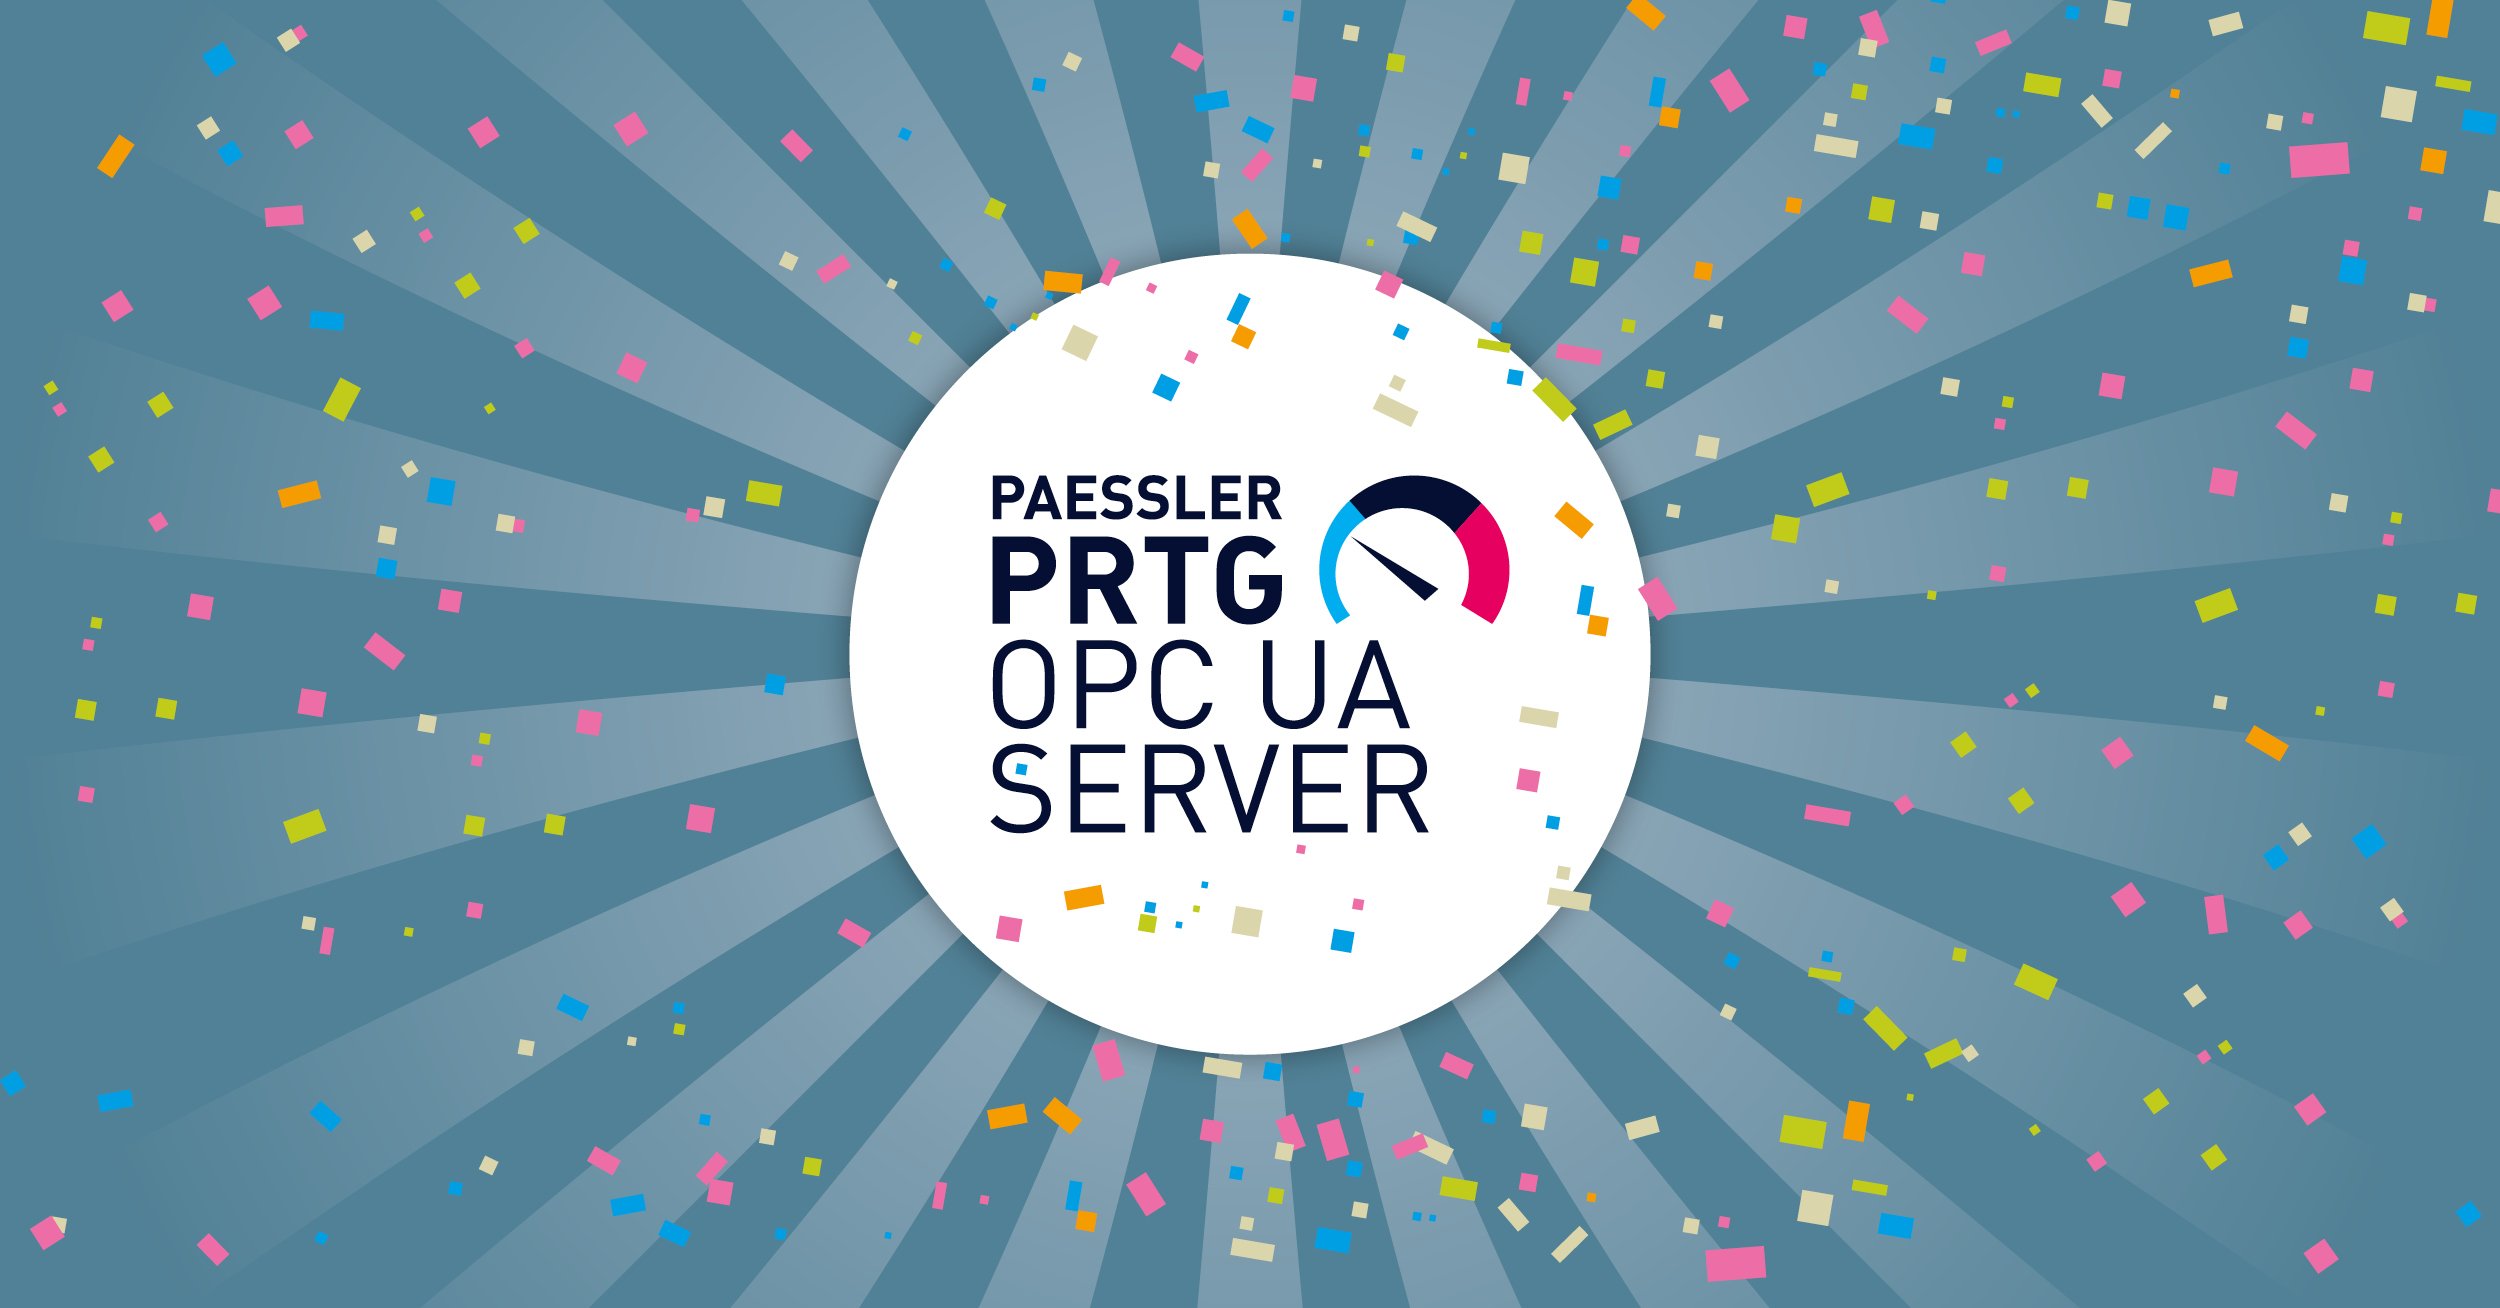 new features for paessler prtg opc ua server